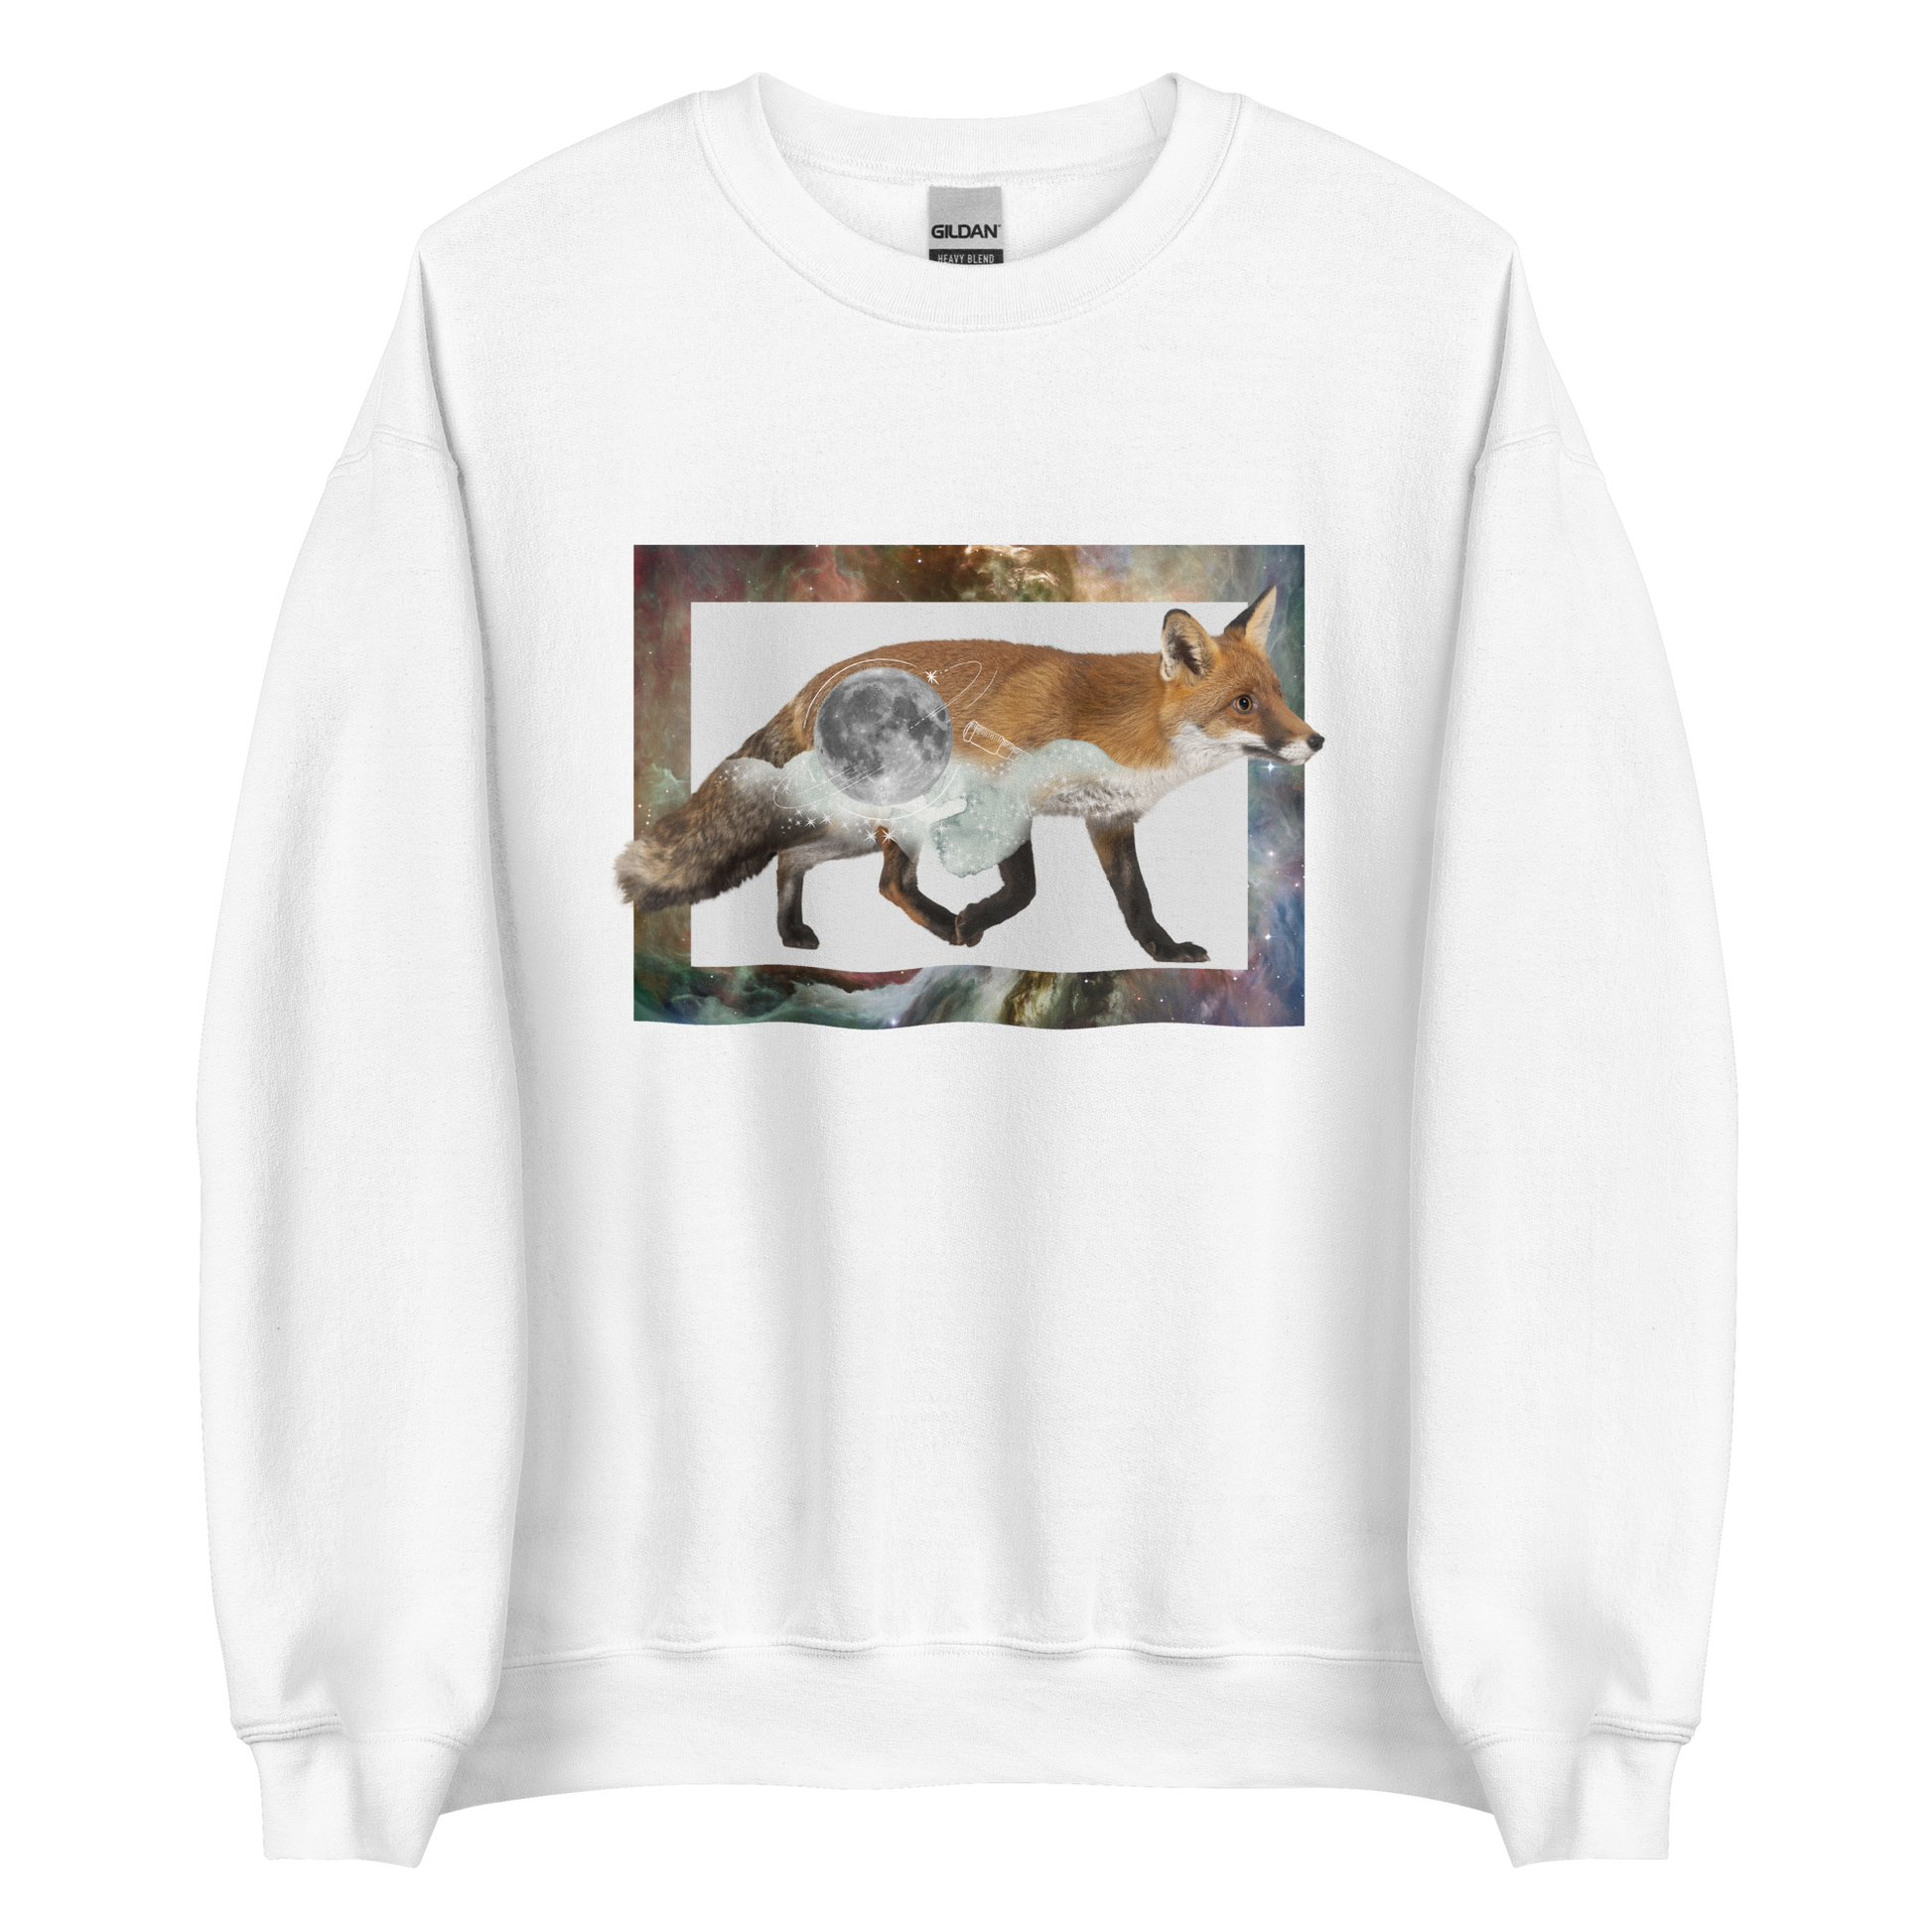 White Fox Sweatshirt featuring an eye-catching Space Fox graphic on the chest - Cool Graphic Fox Sweatshirts - Boozy Fox